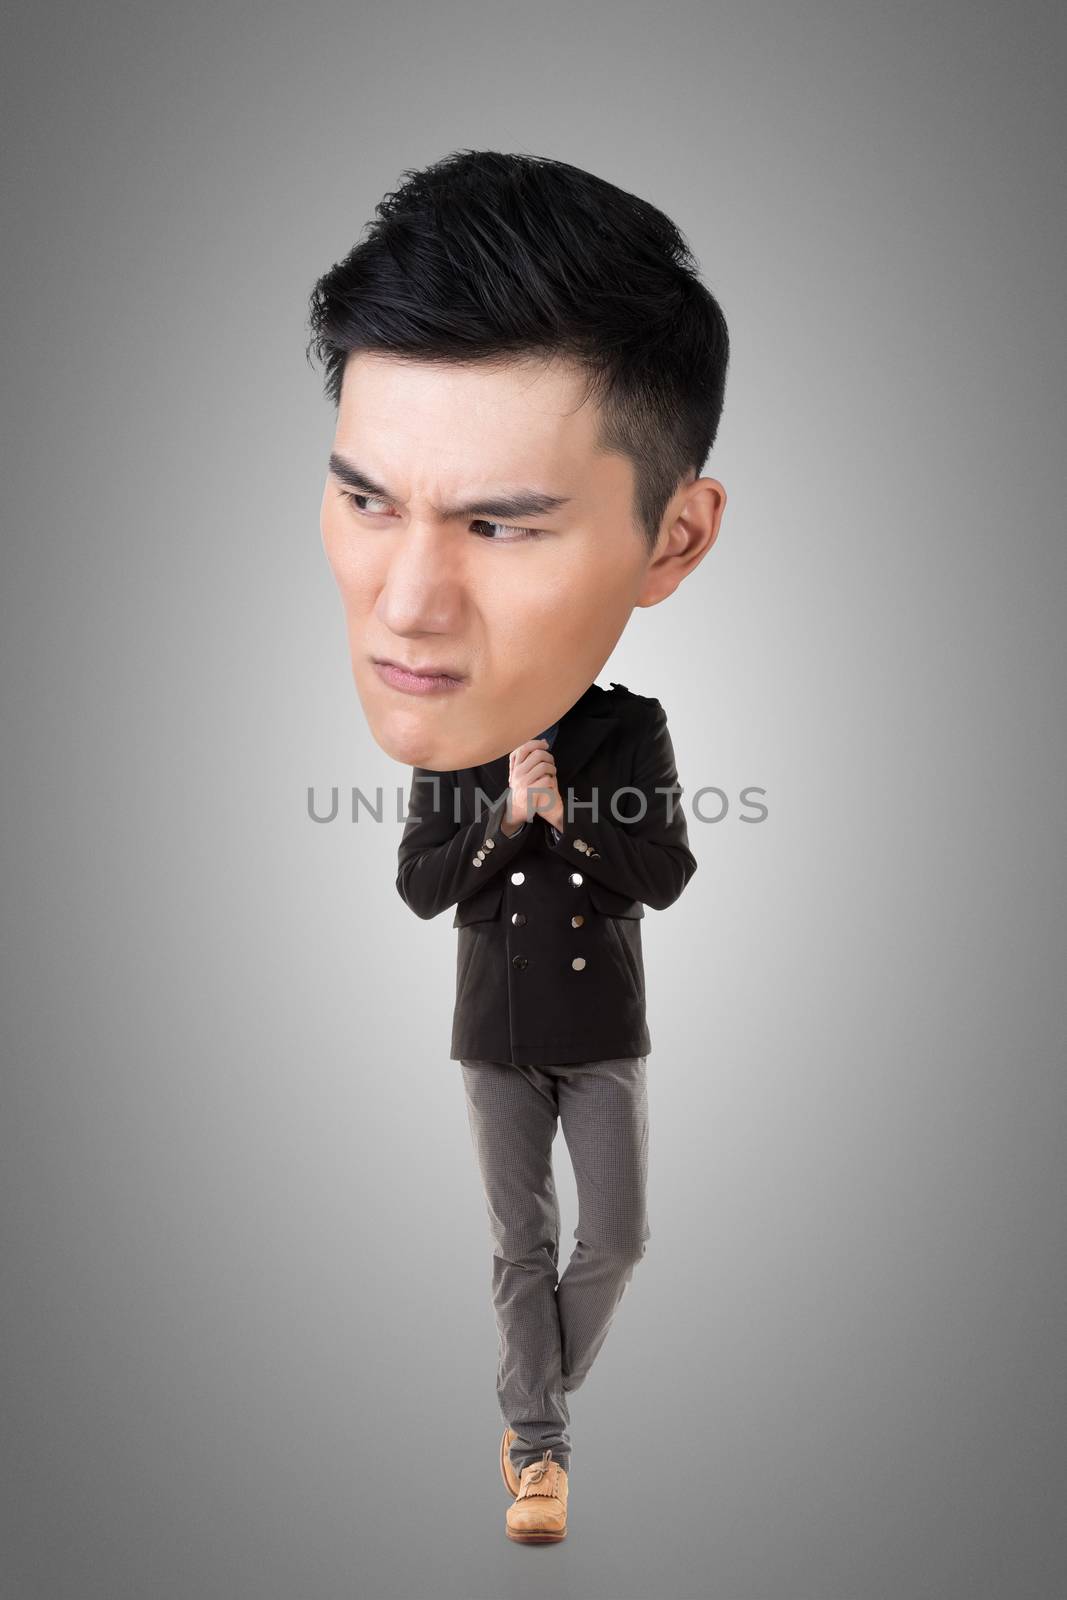 Funny Asian big head man, full length portrait.